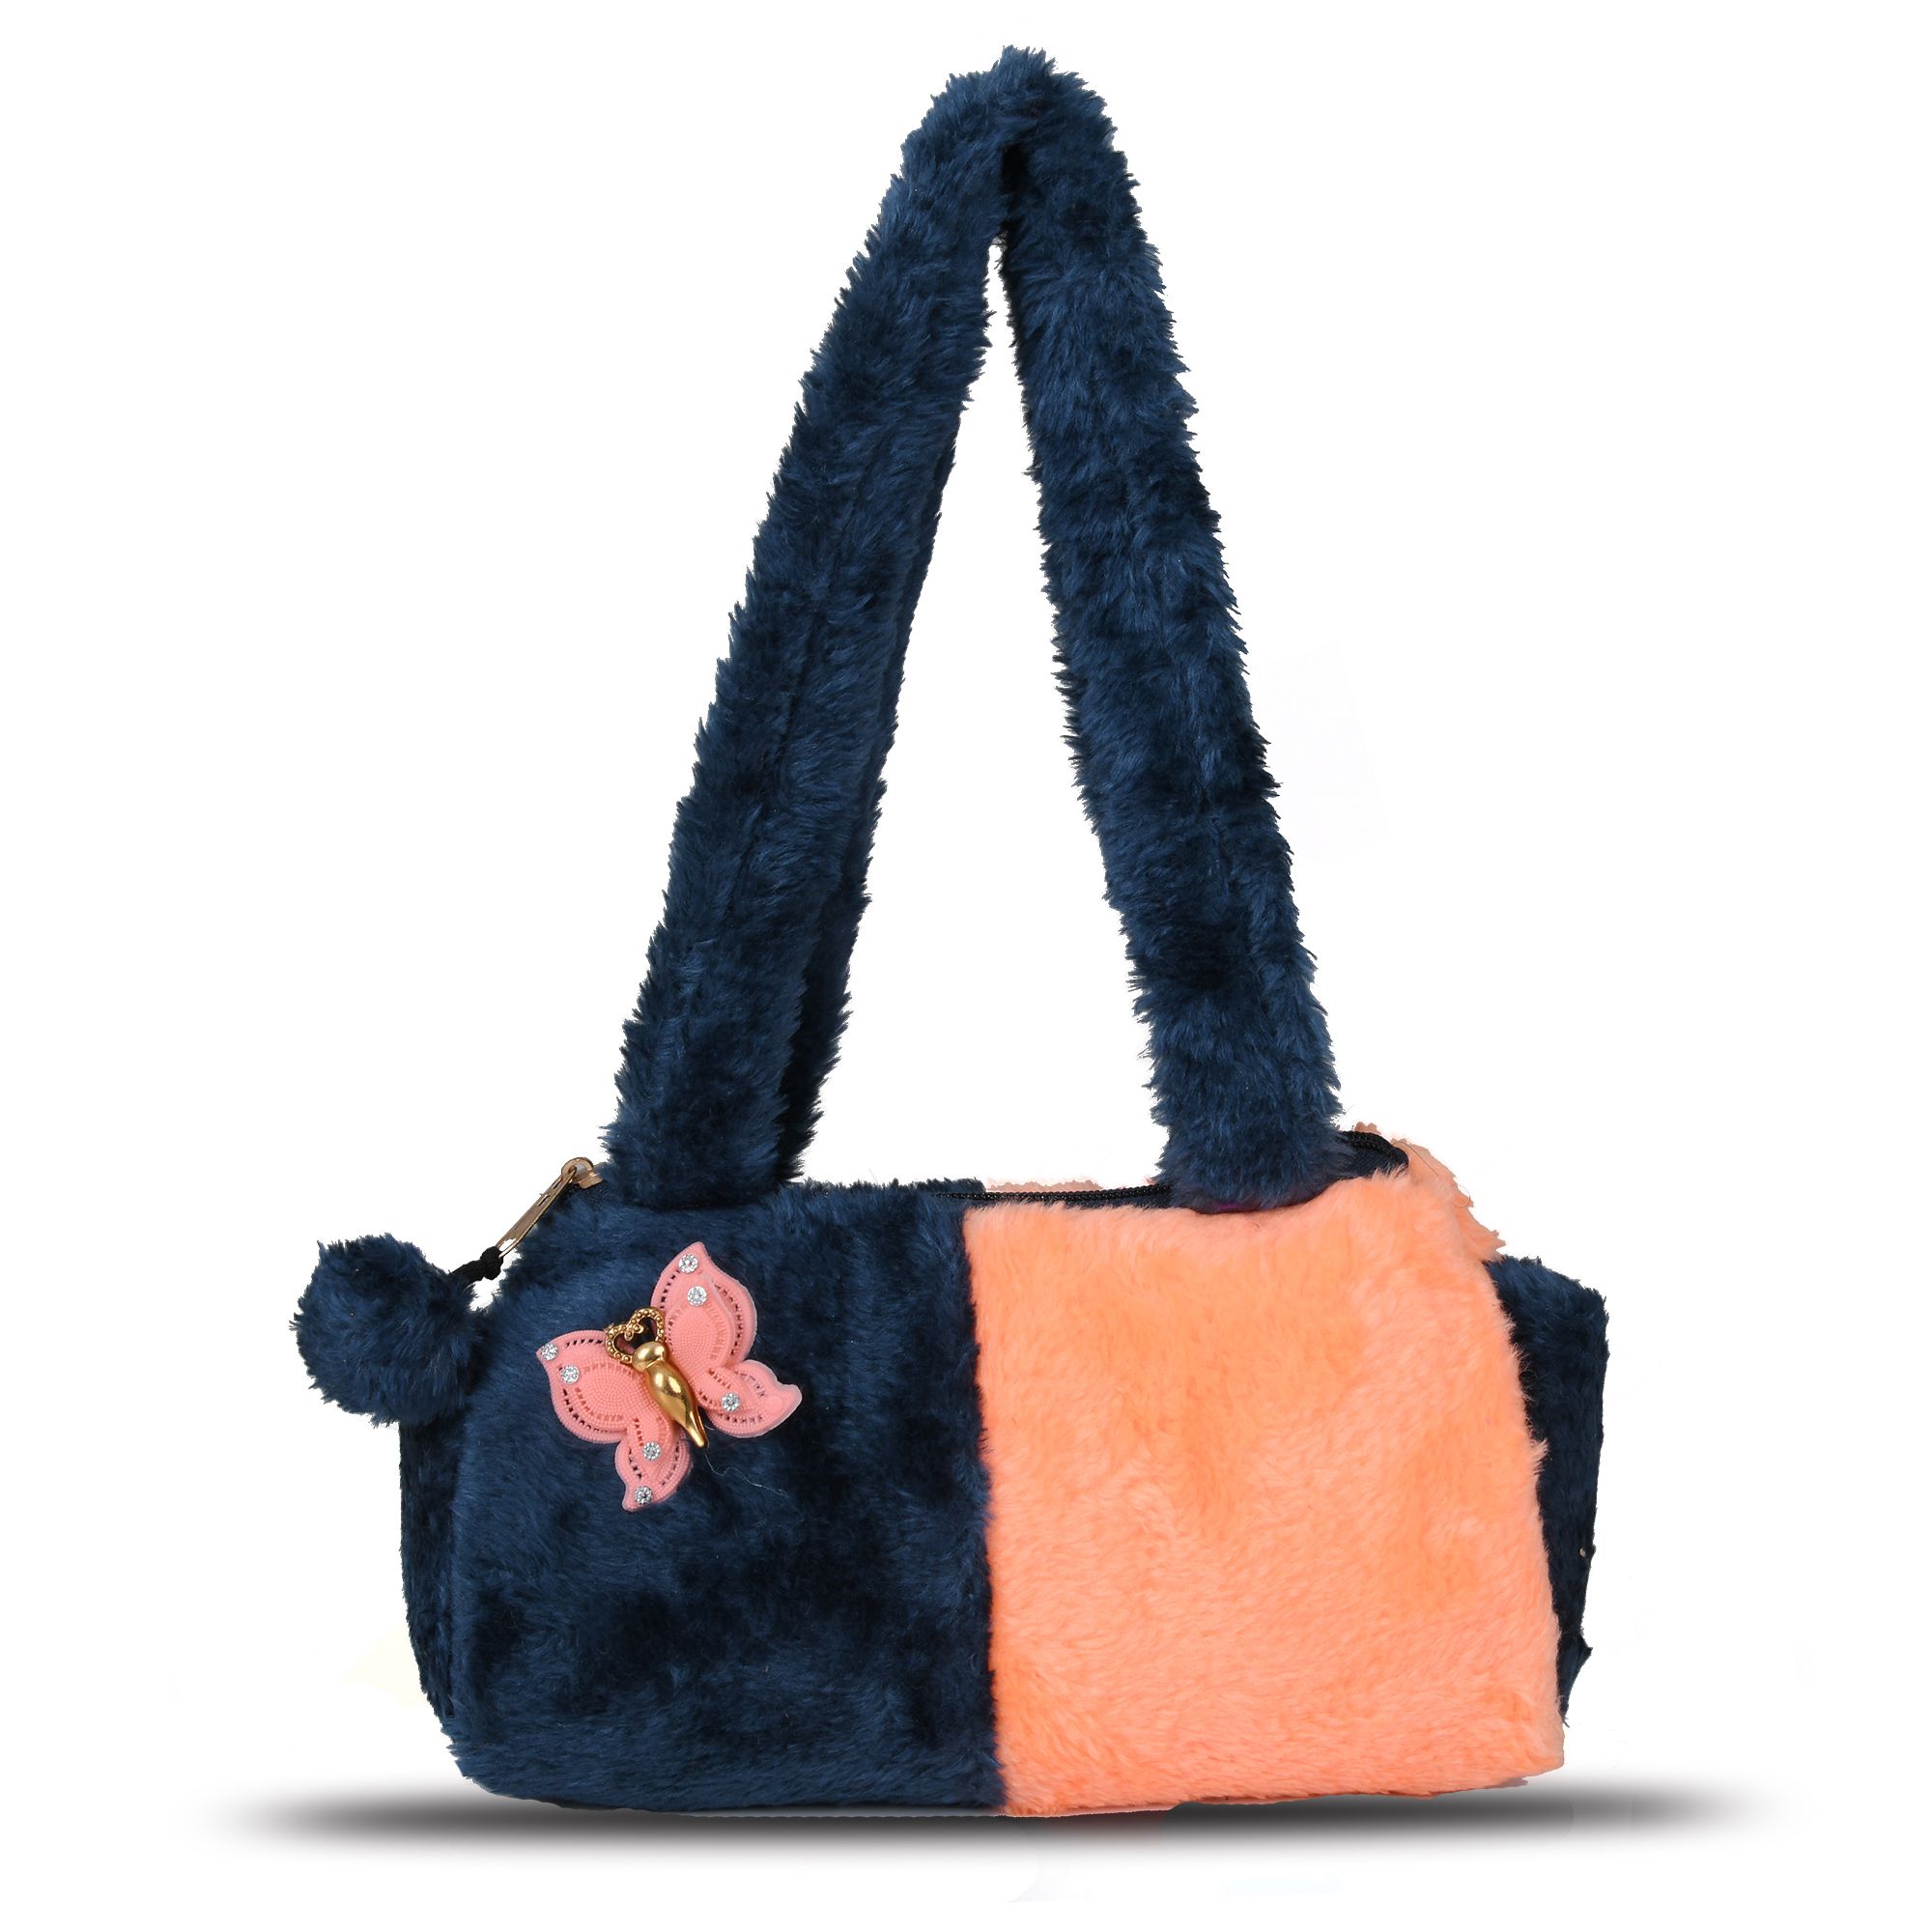 Hot sale fashion bow children purse| Alibaba.com